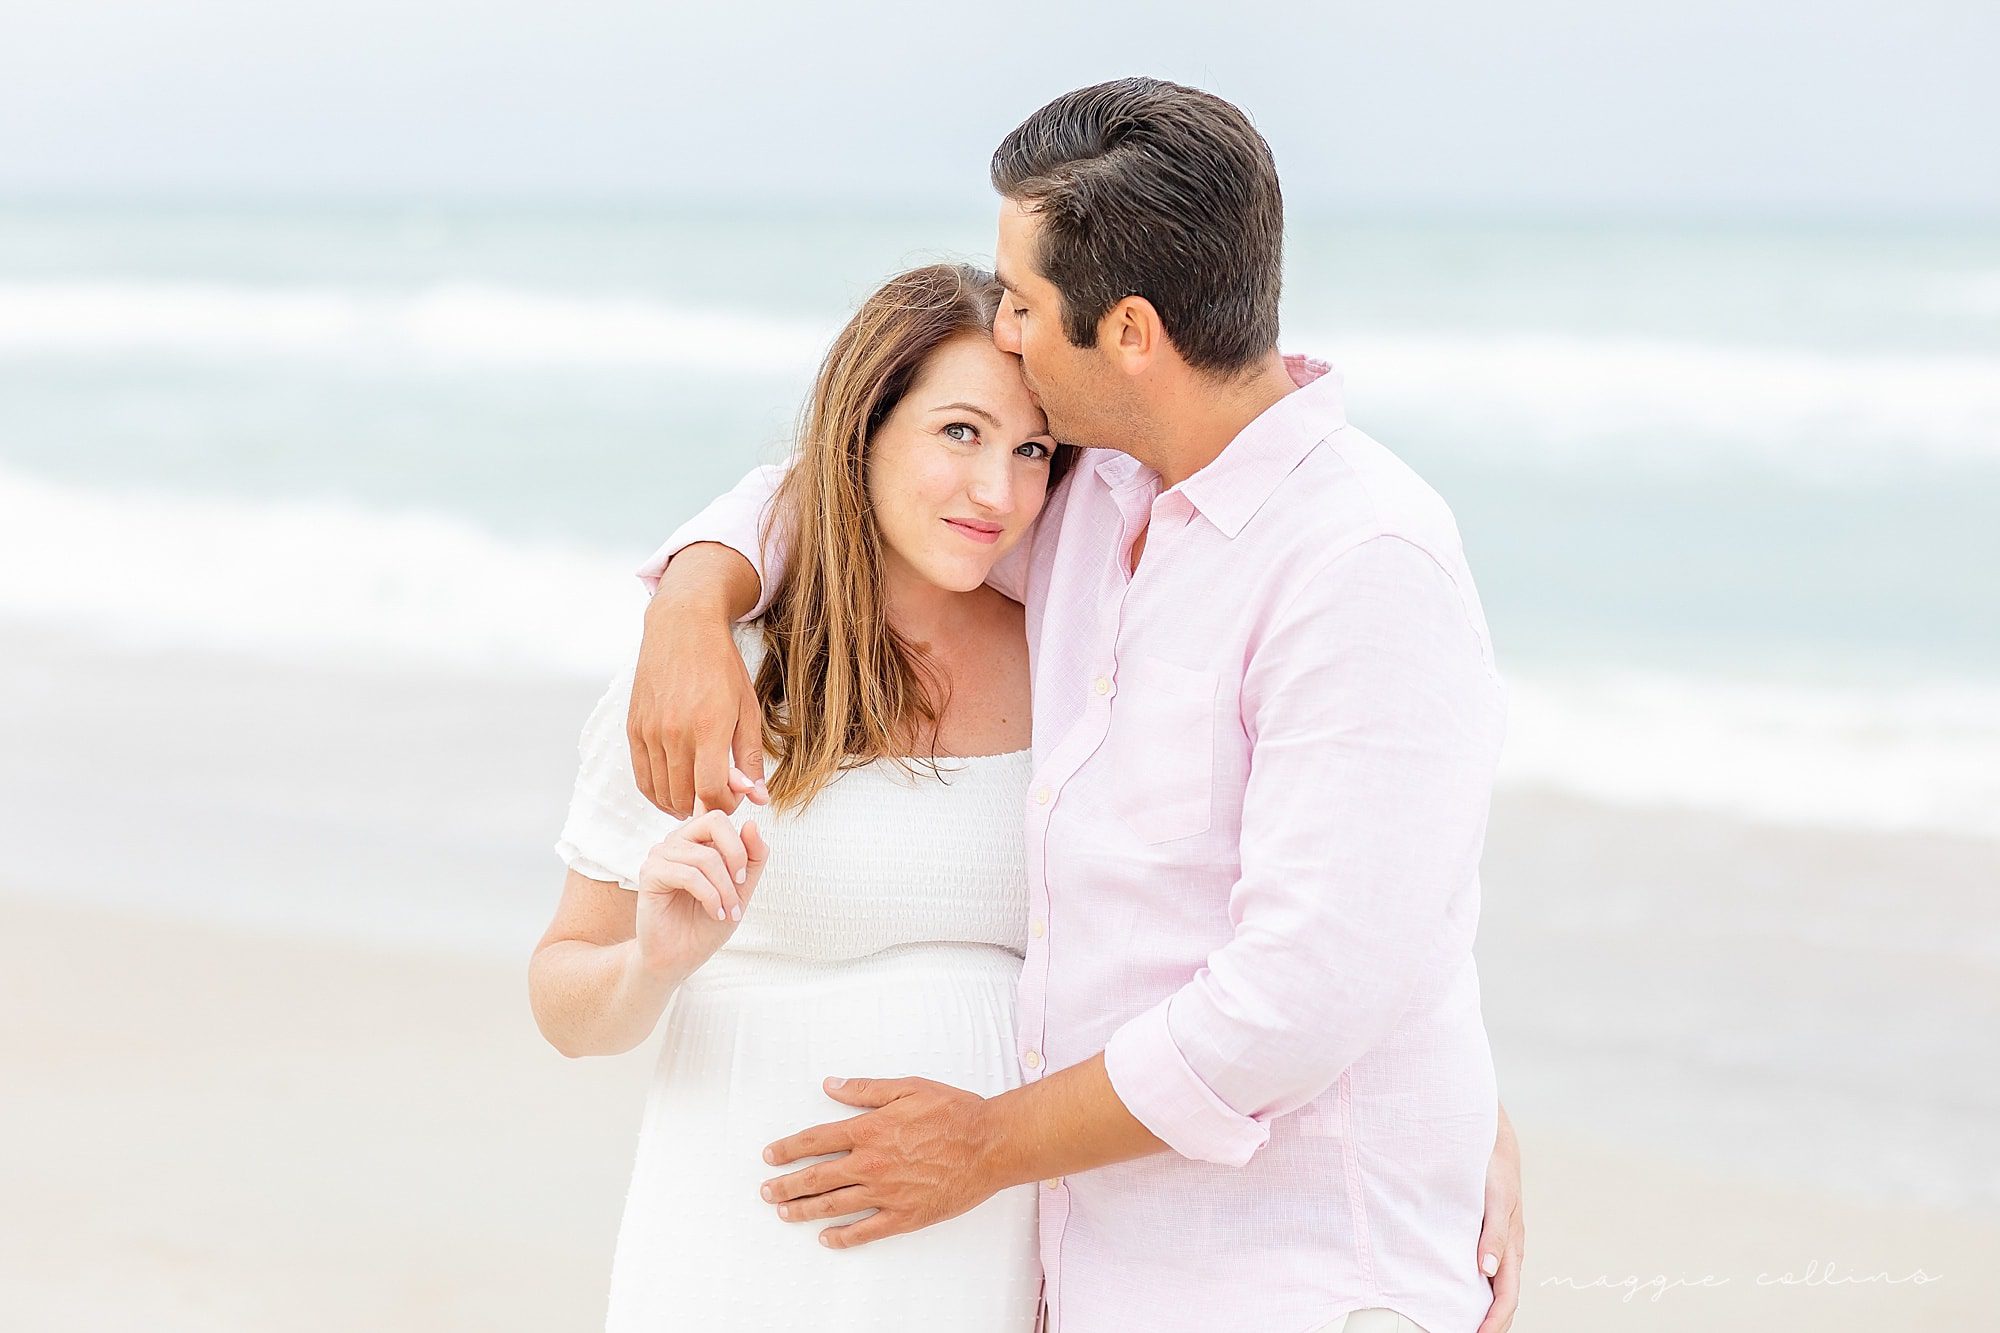 couple embrace man kisses woman on the head maternity beach portrait